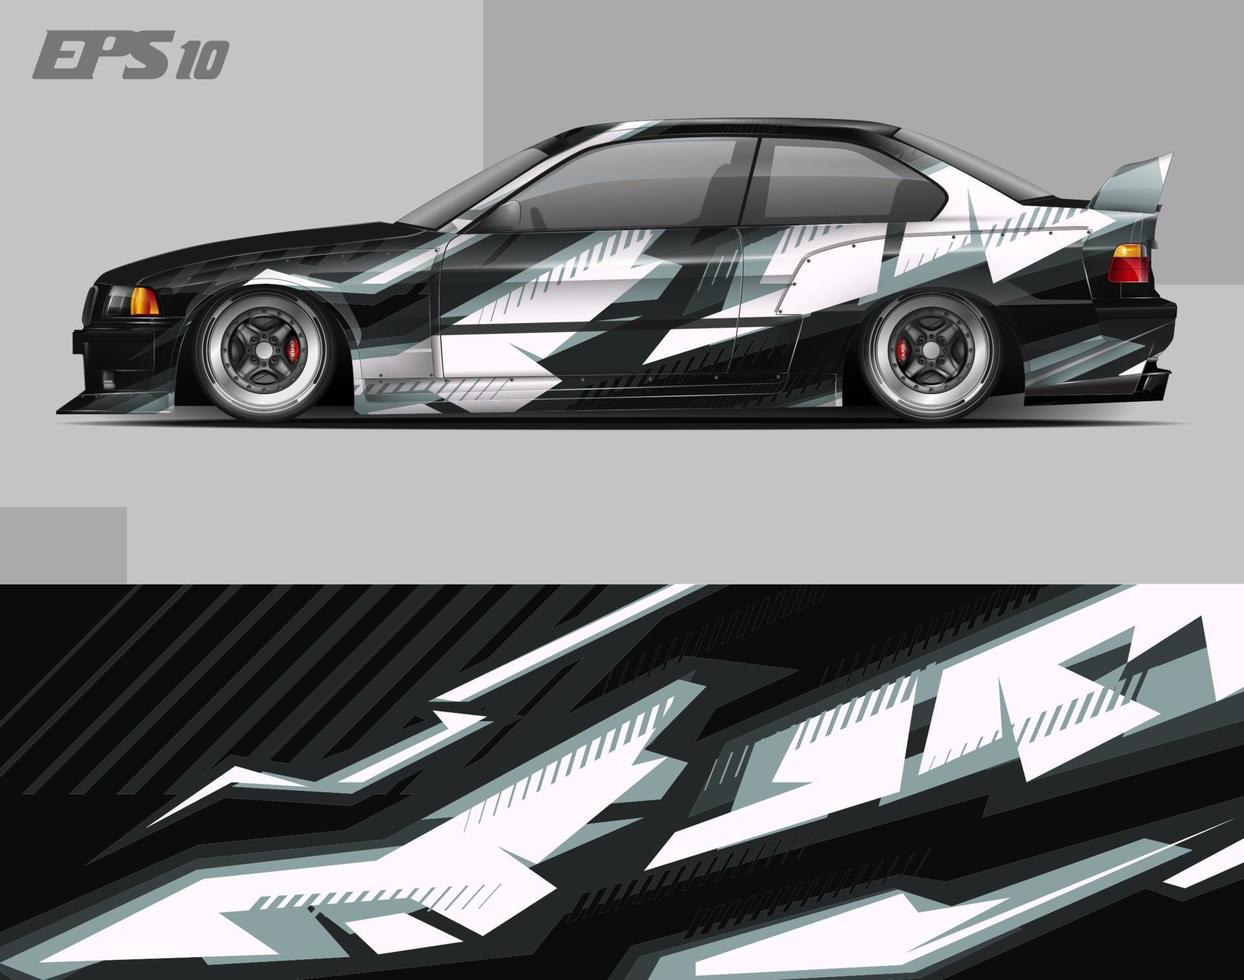 abstrakt bilinpackningsdesign modern racingbakgrundsdesign för fordonsinpackning, racerbil, rally, etc vektor